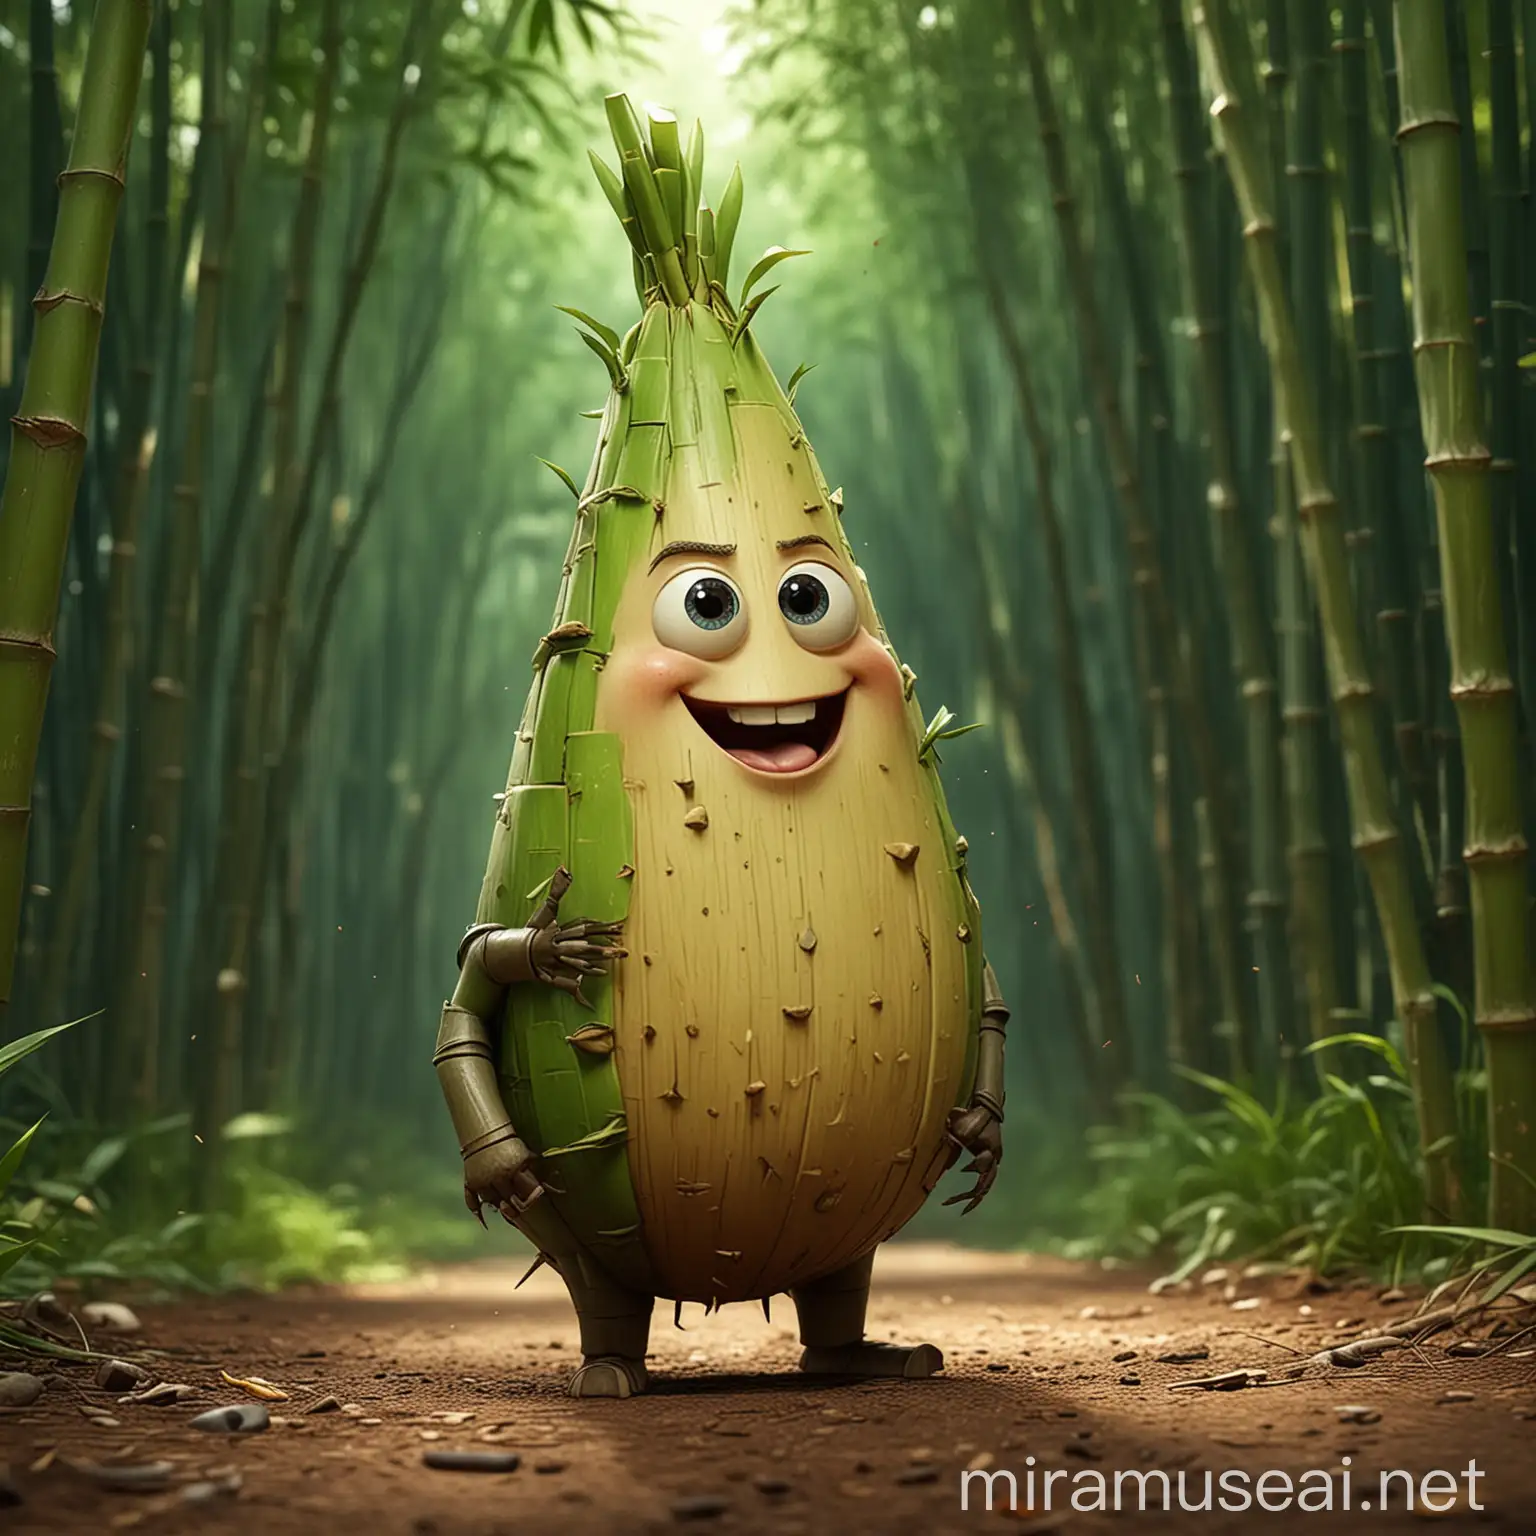 Bamboo Shoot Illustration Vibrant Pixar Style Artwork